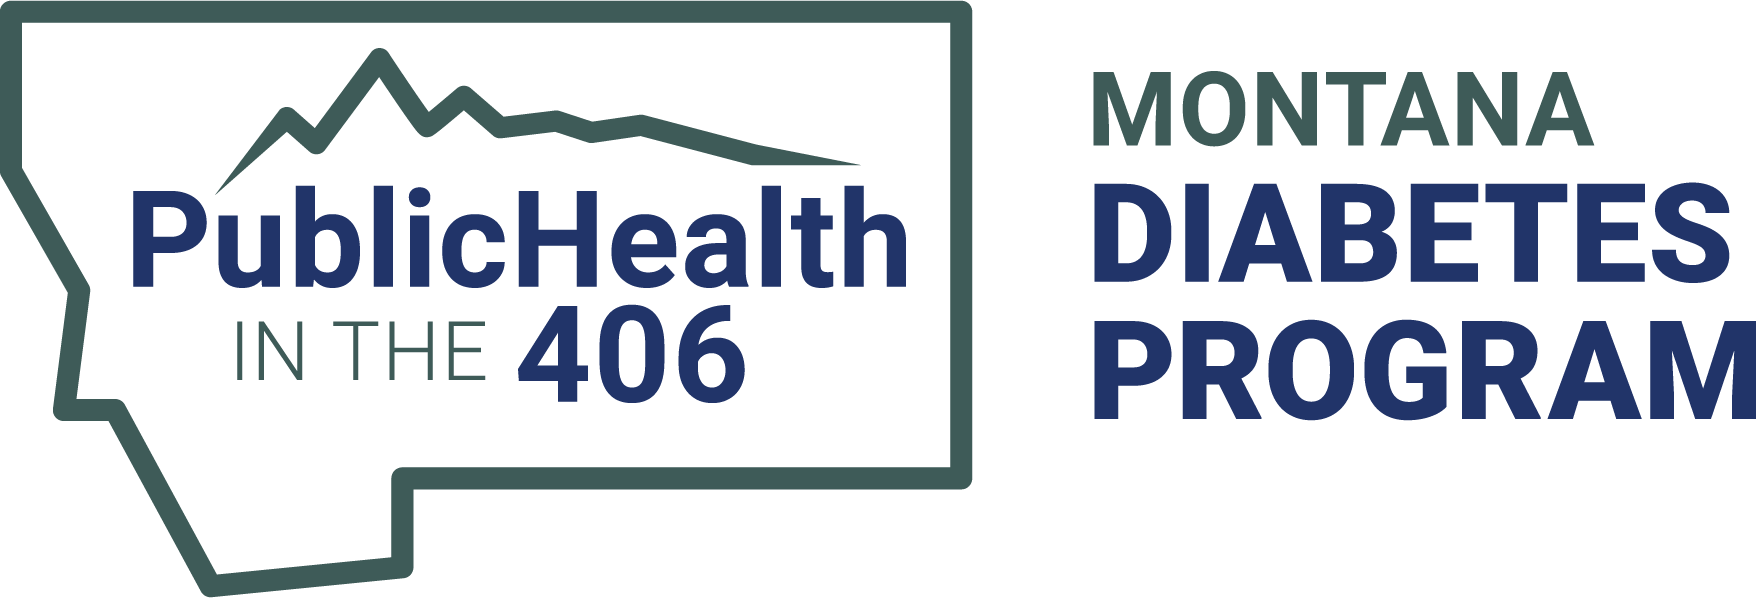 Public Health in the 406 Montana Diabetes Program